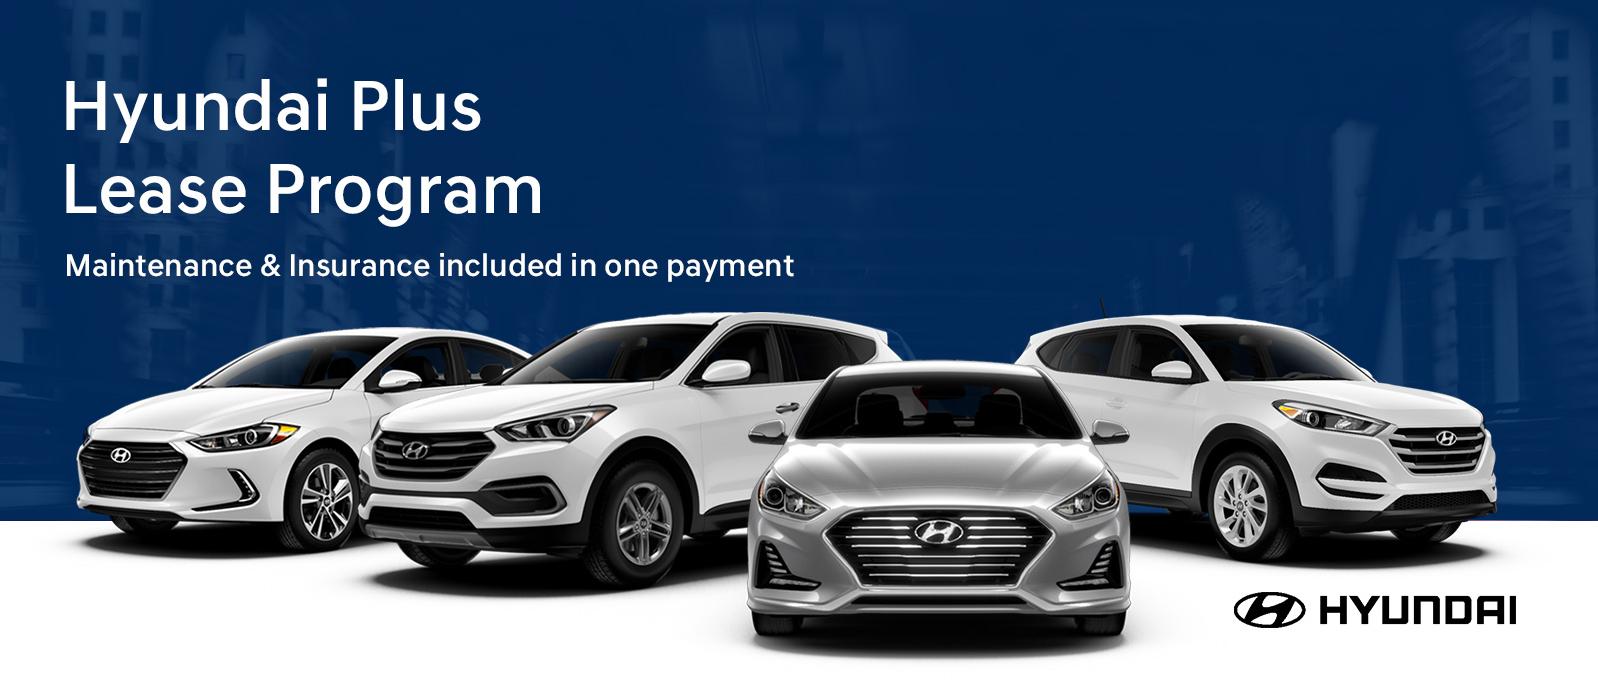 Hyundai Plus Lease Program